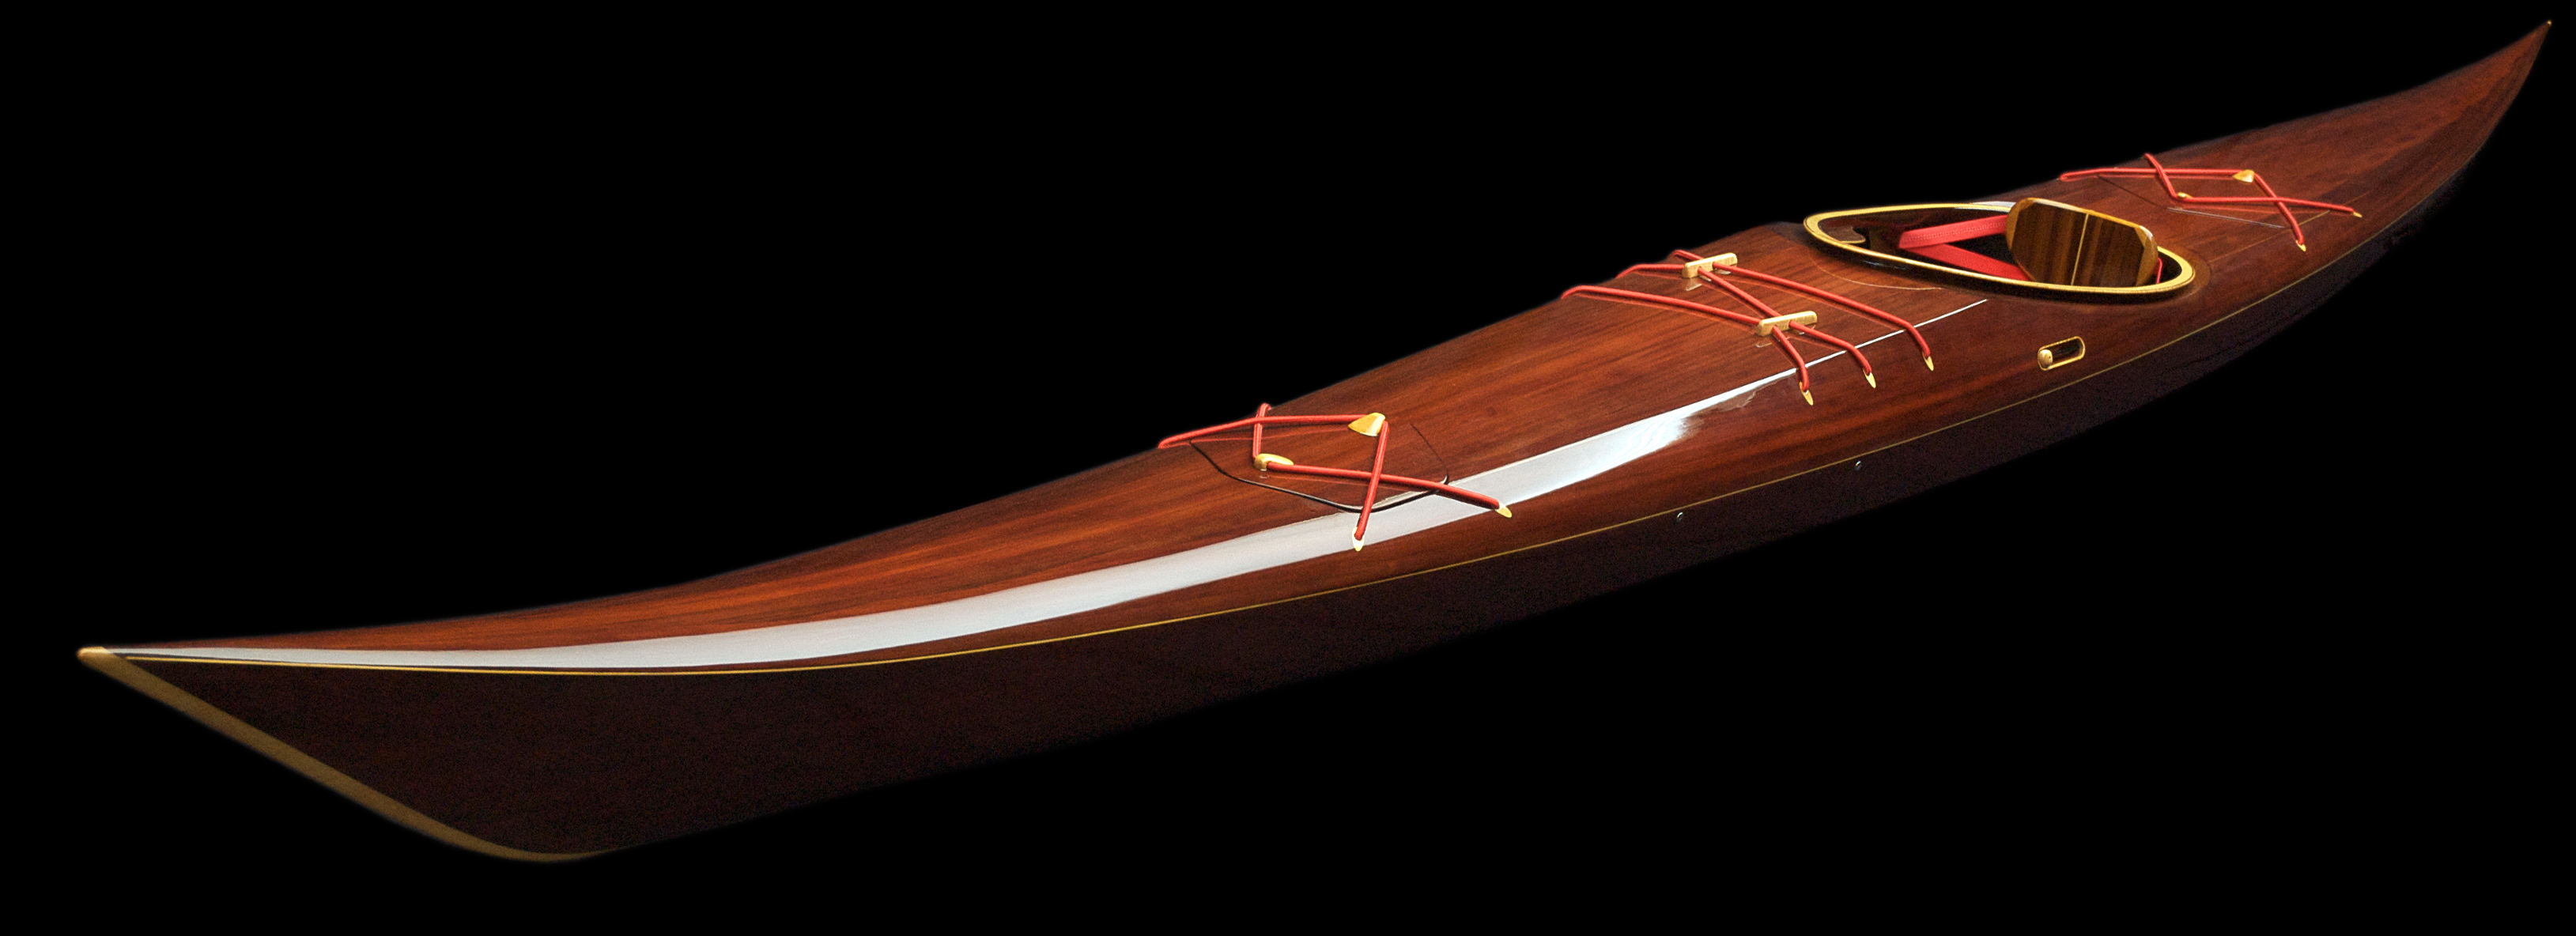 Petrel wood kayak